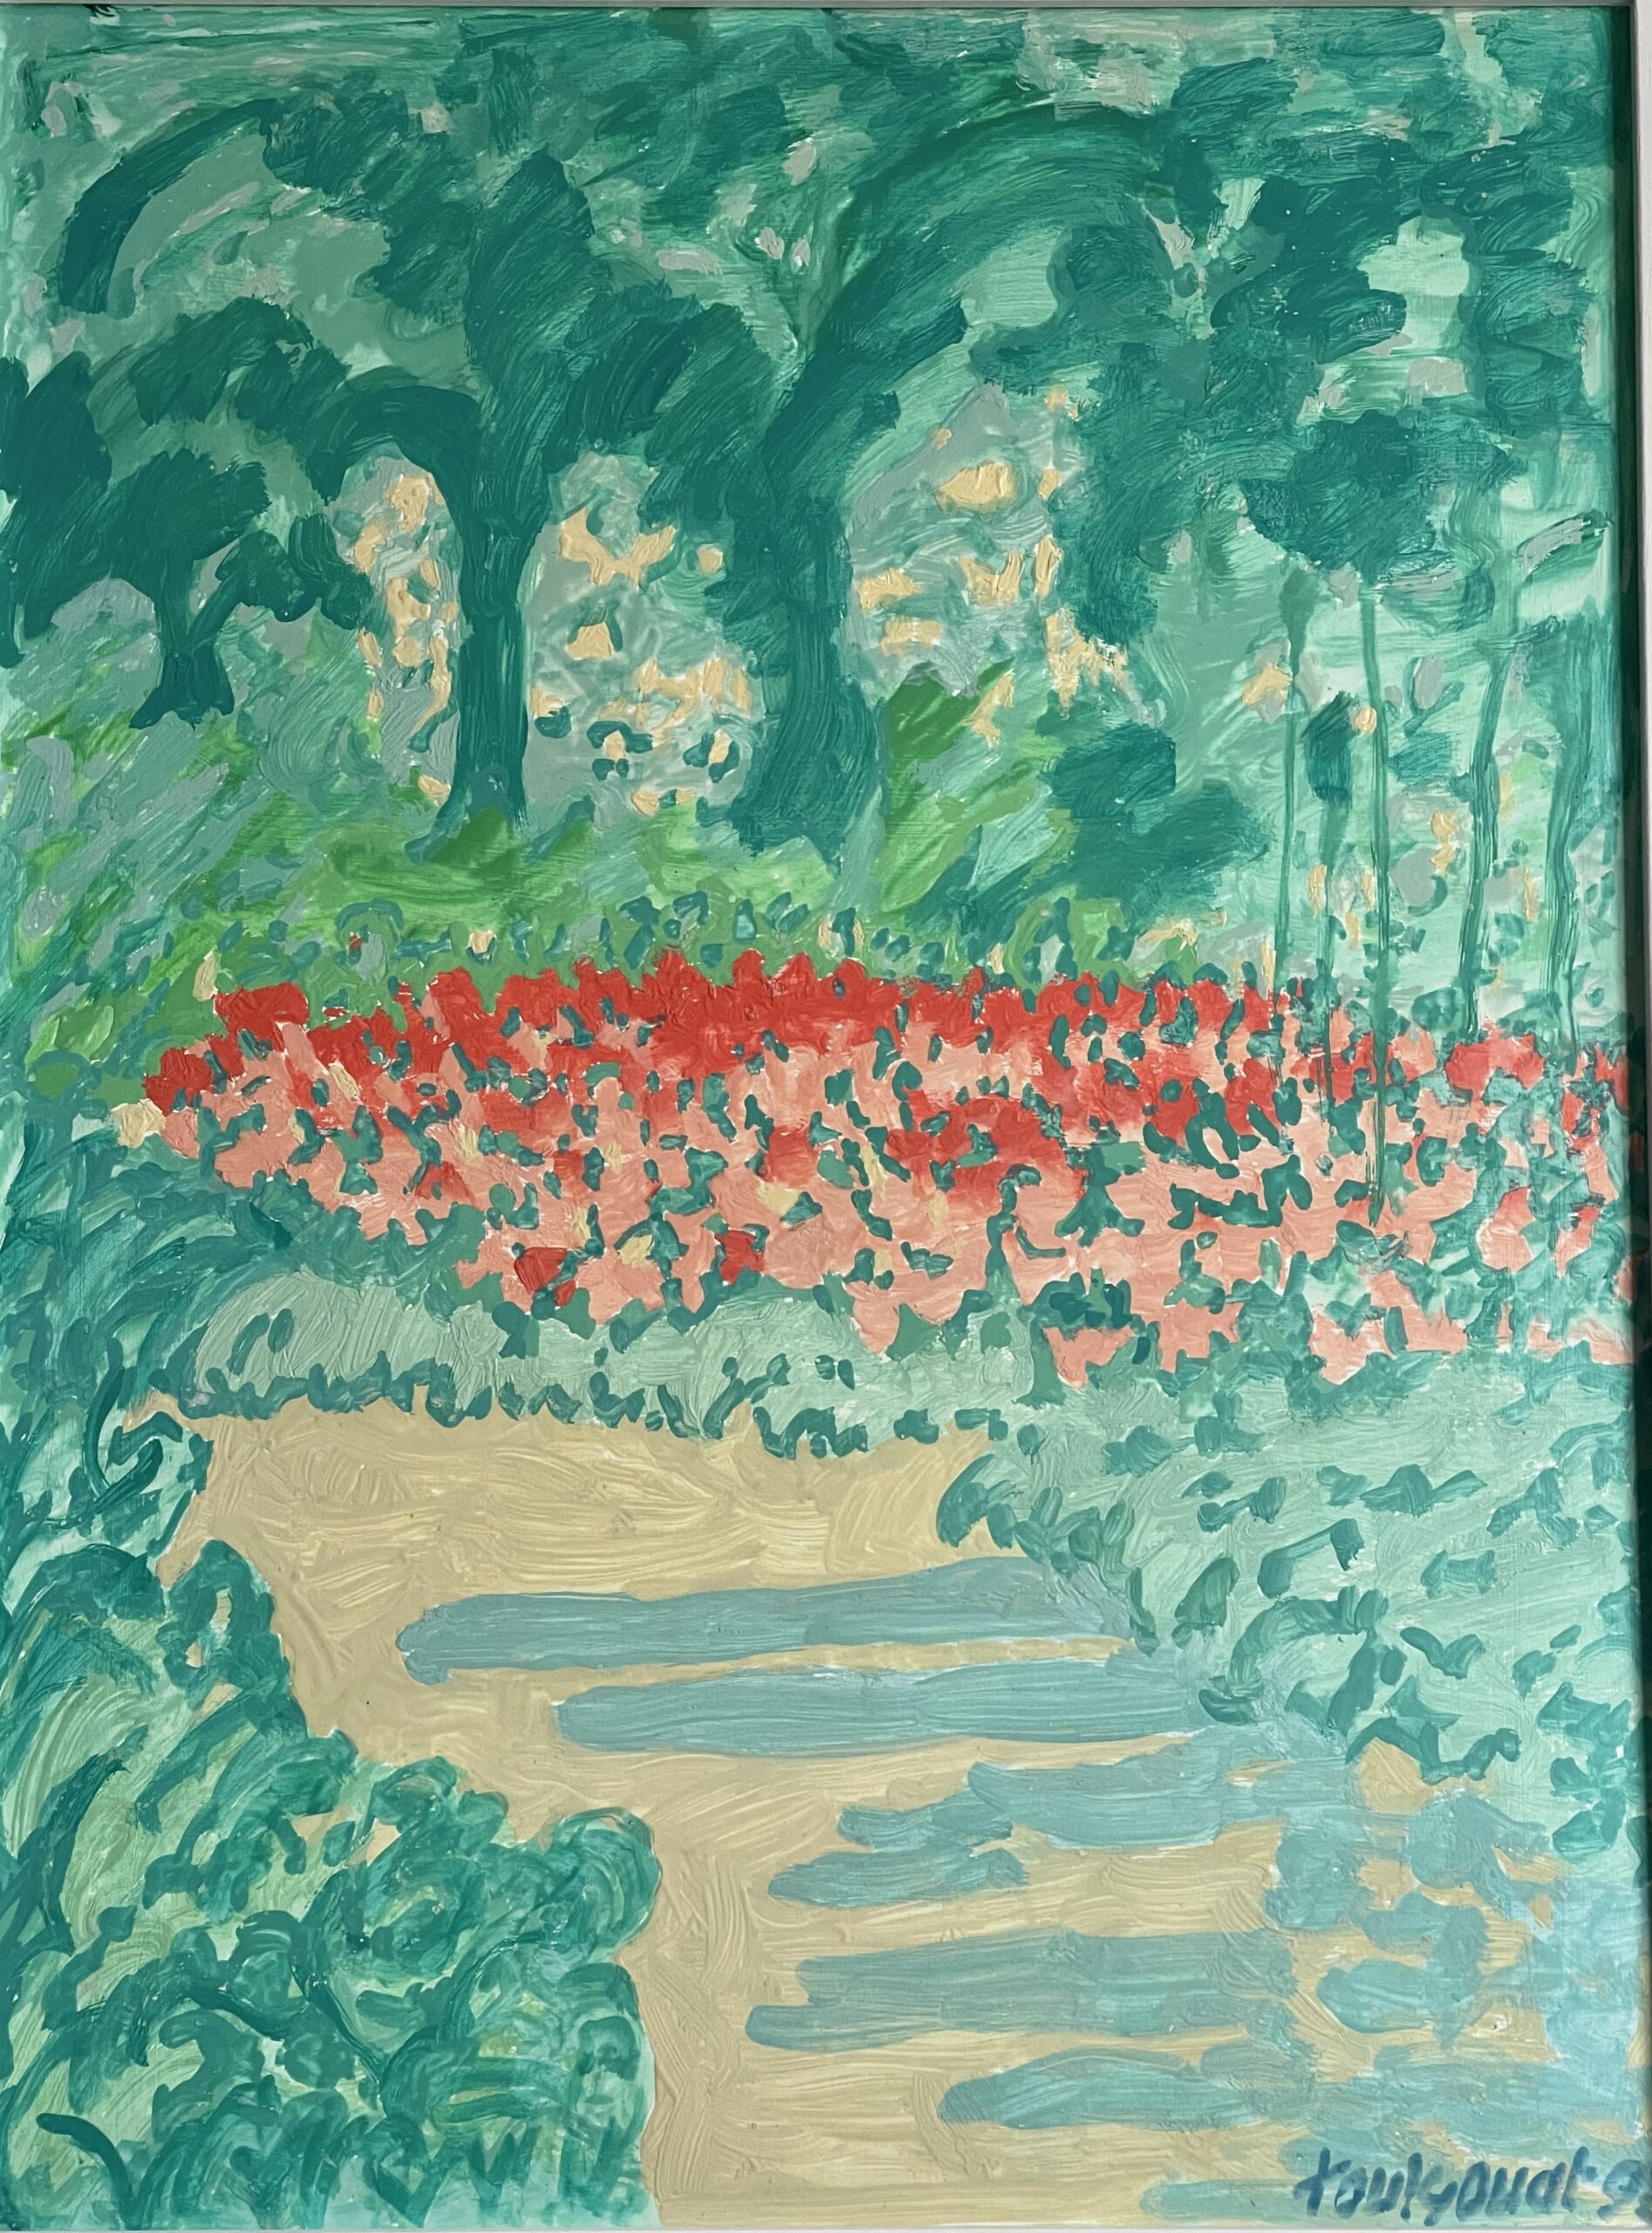 CLaude Monet's Garden